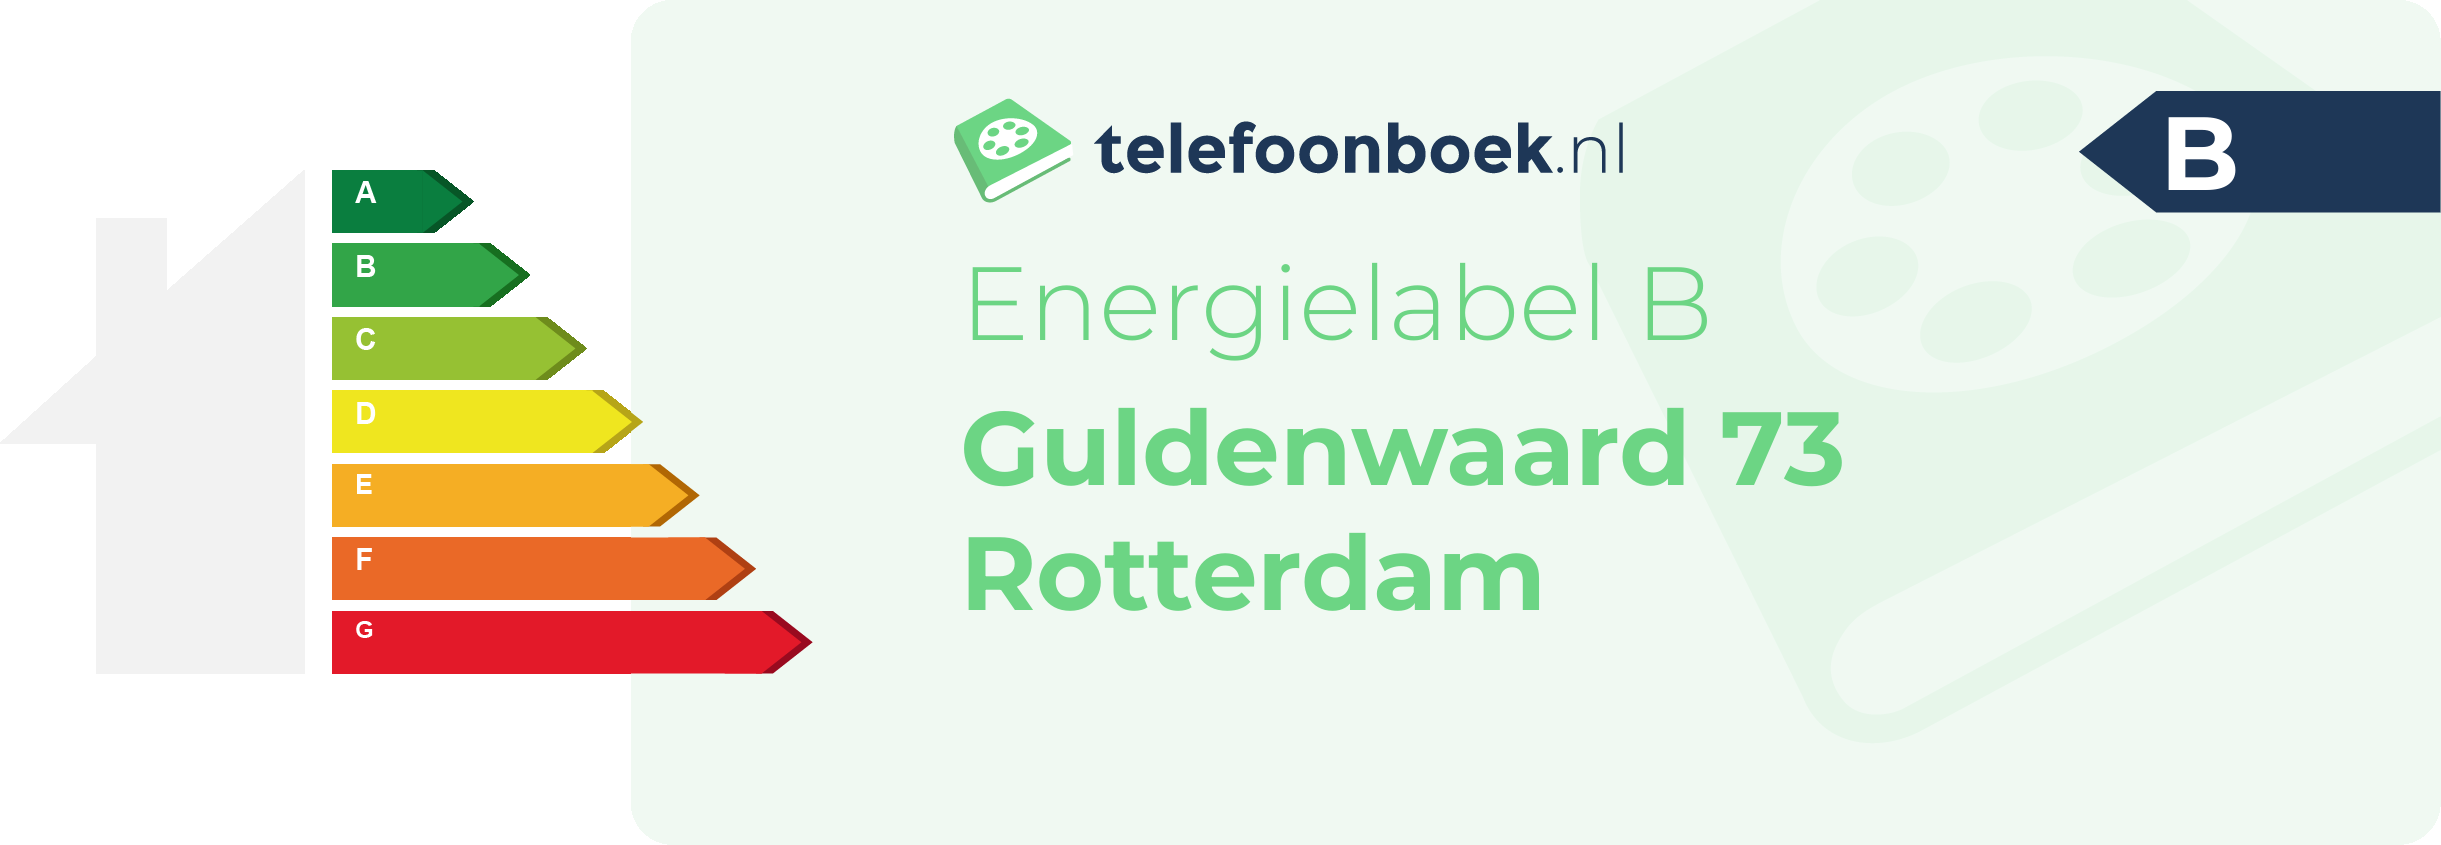 Energielabel Guldenwaard 73 Rotterdam